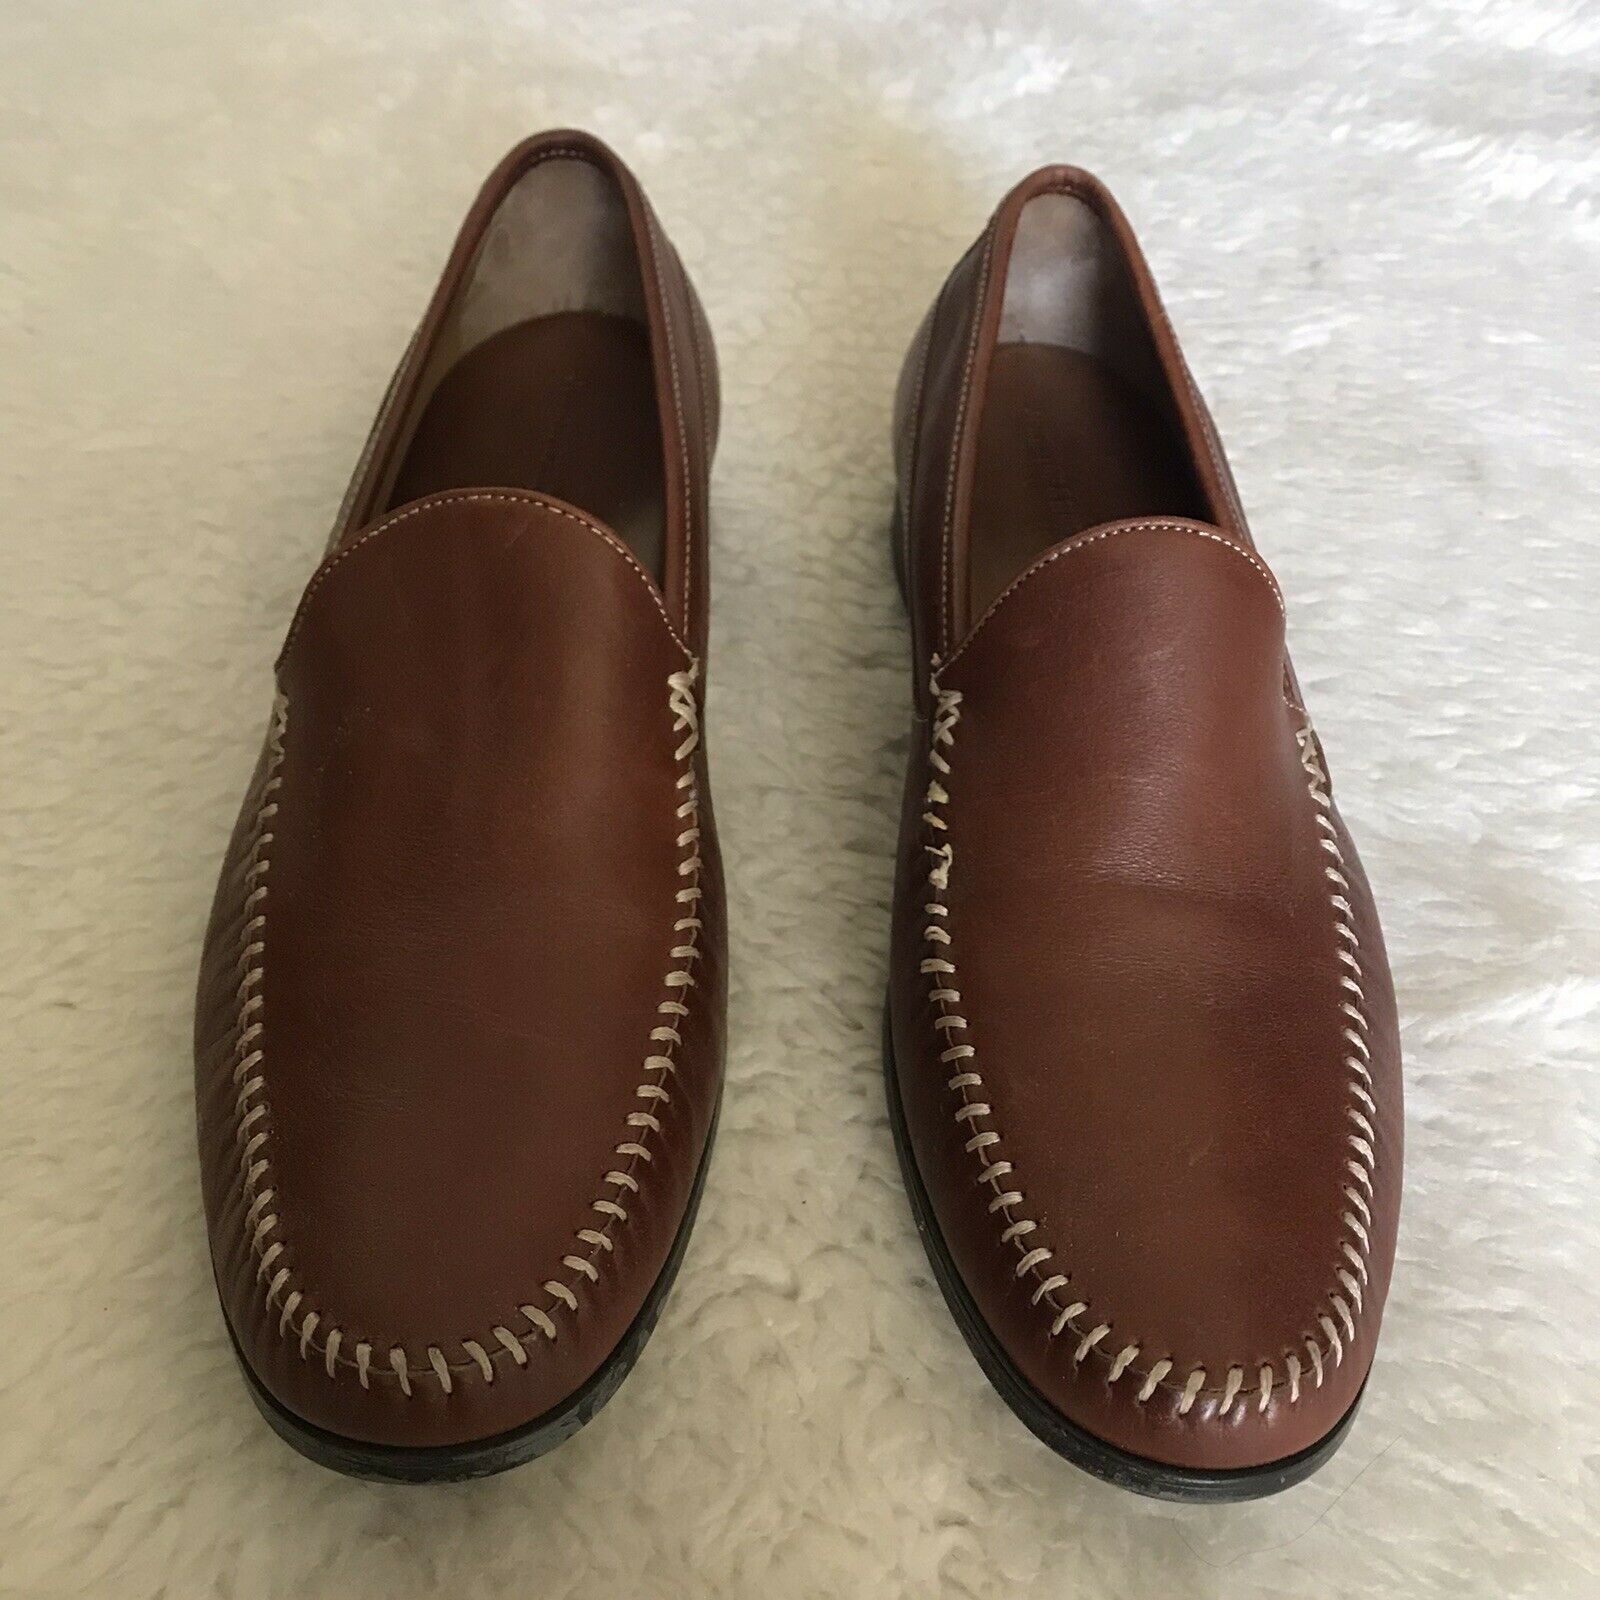 Johnson & Murphy Sheepskin Men’s Loafers Shoes Size 11.5